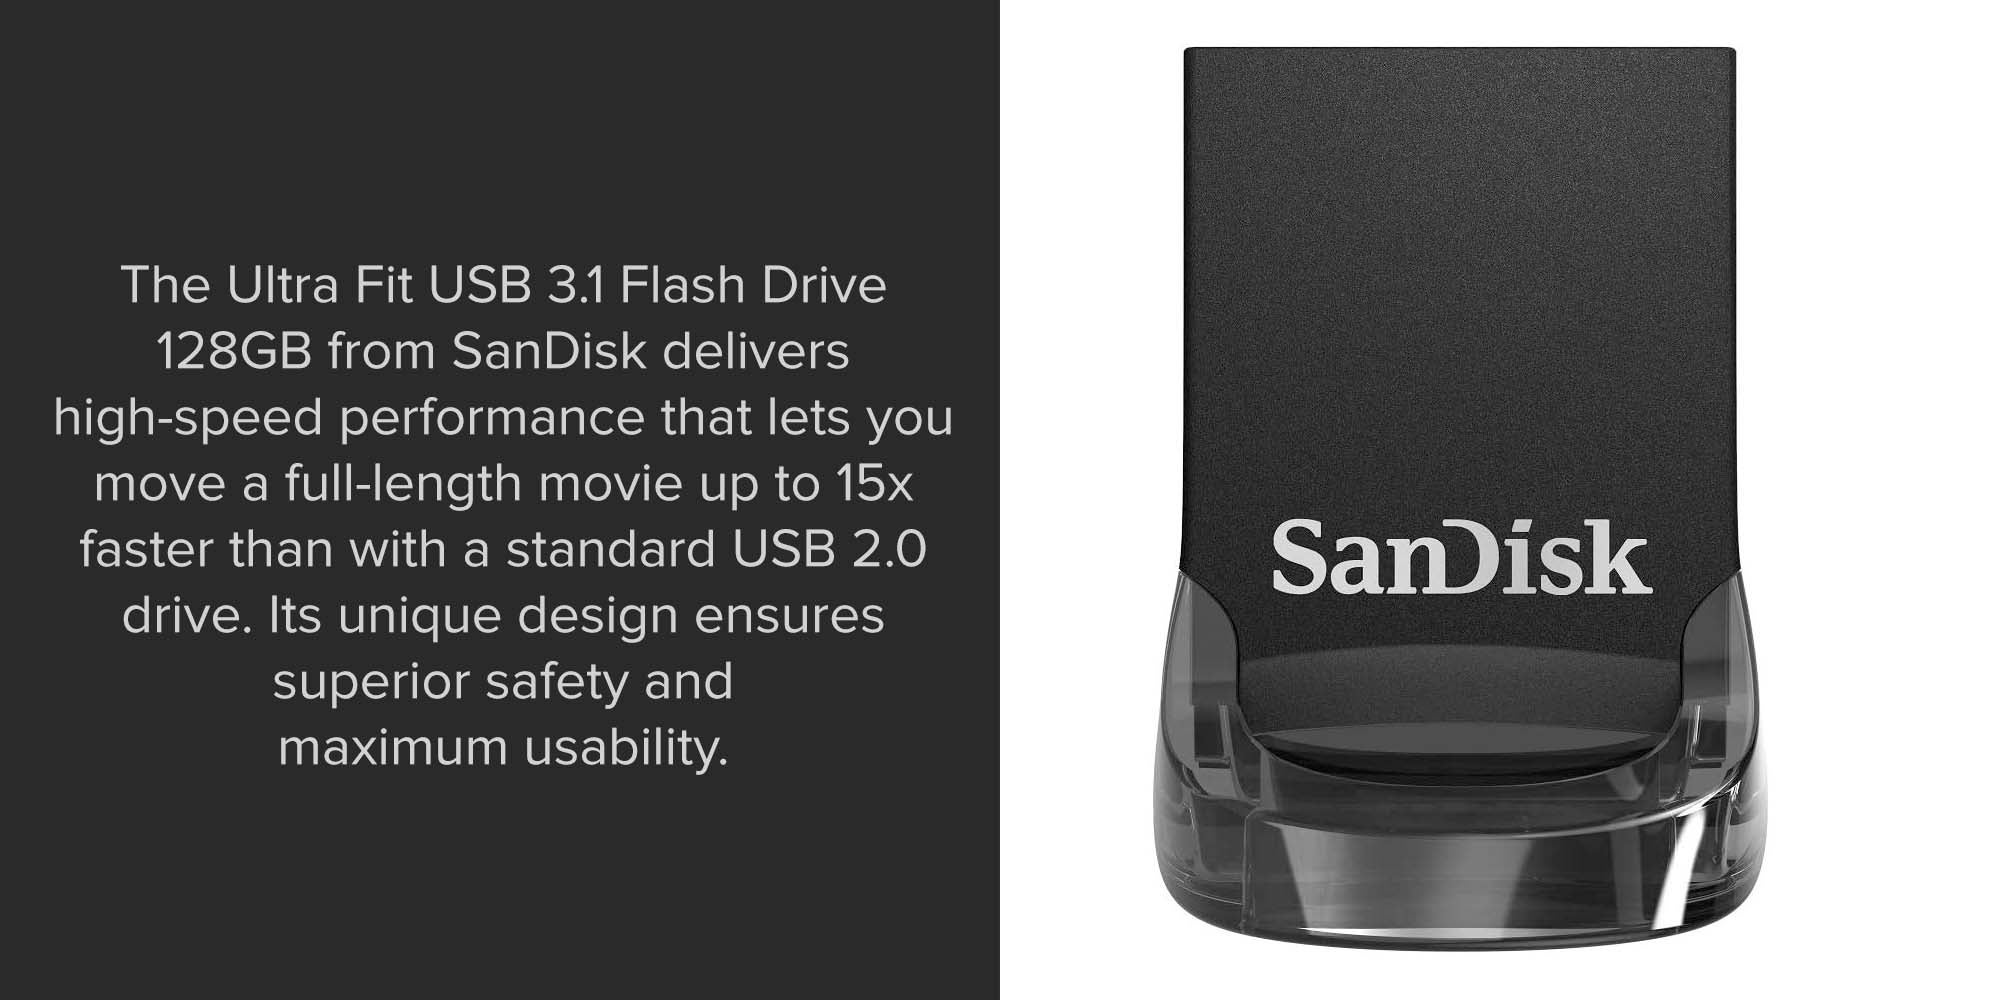 PENDRIVE 128GB SANDISK ULTRA FIT CZ430 USB3.1 - SDCZ430-128G-G46 